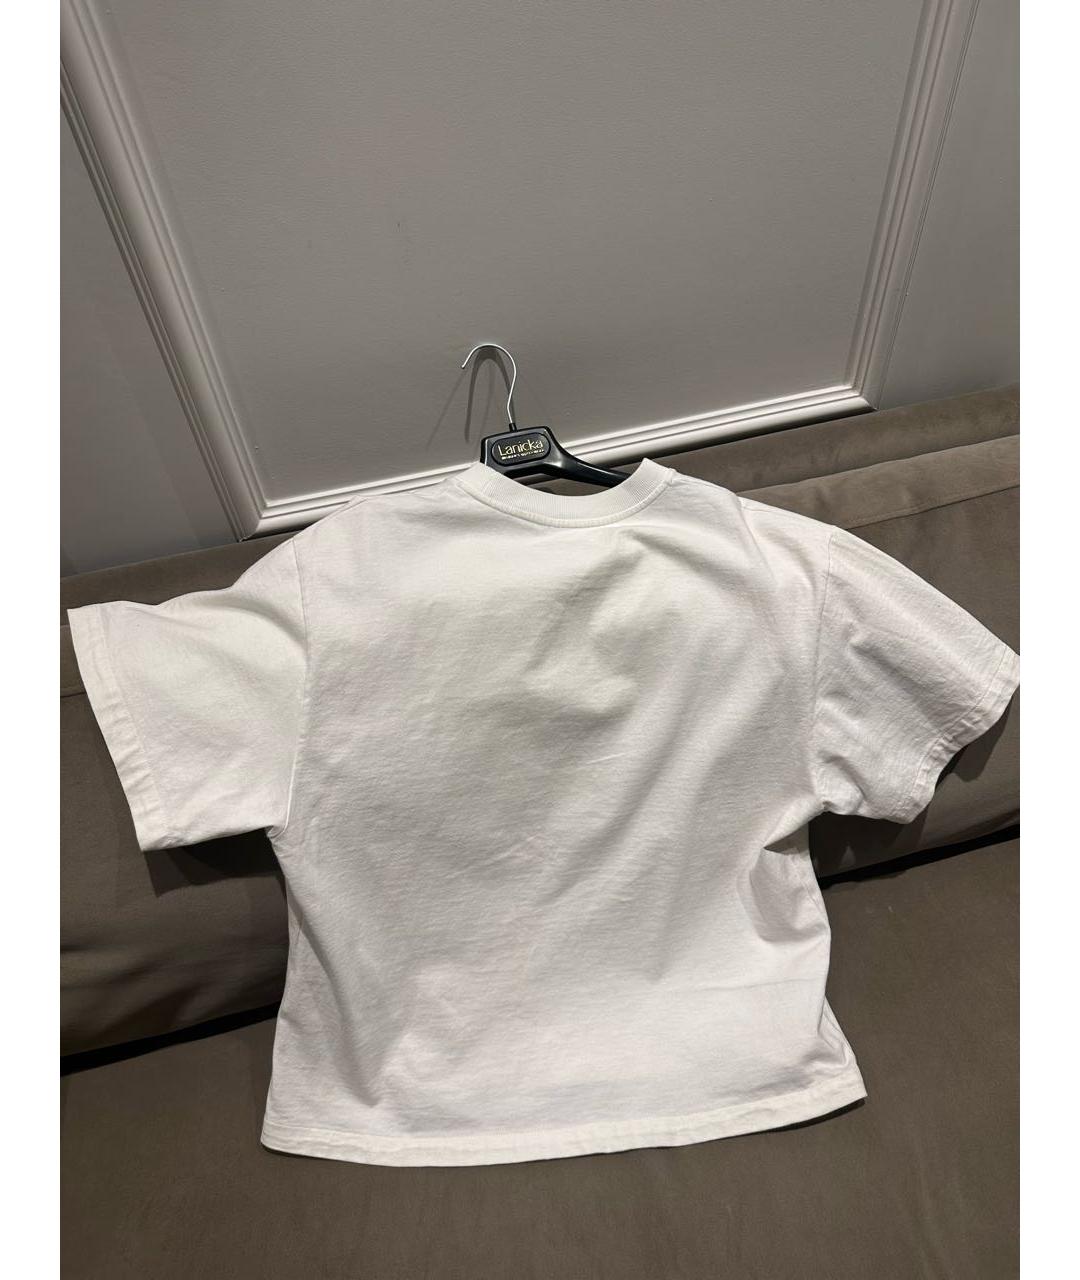 JIL SANDER Белая хлопковая футболка, фото 2